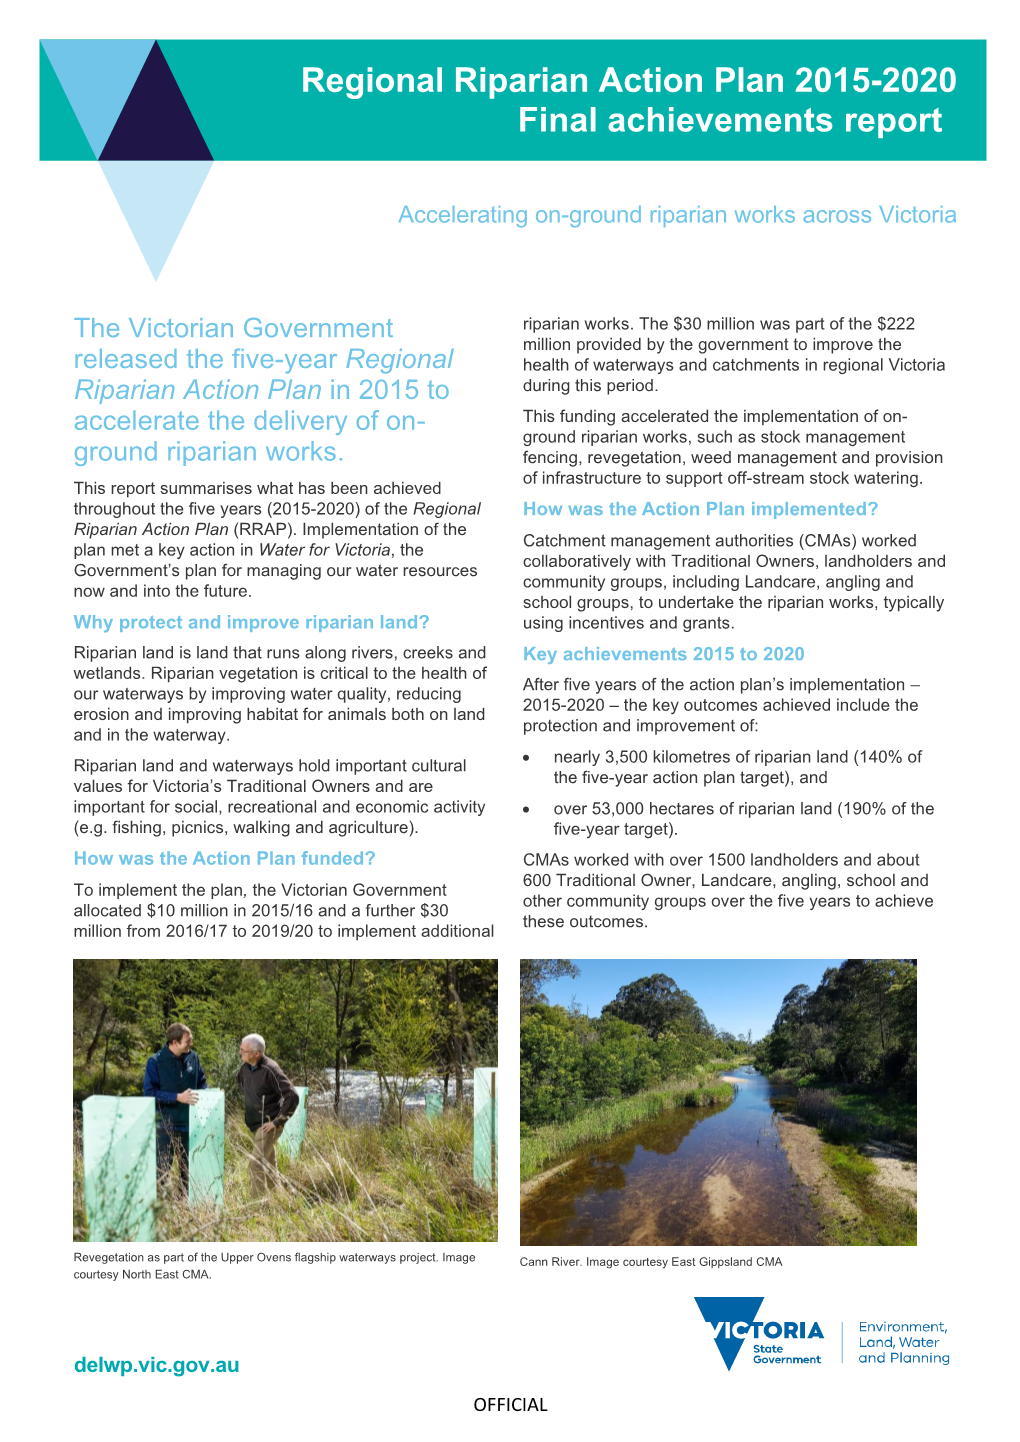 Regional Riparian Action Plan 2015-2020 Final Achievements Report